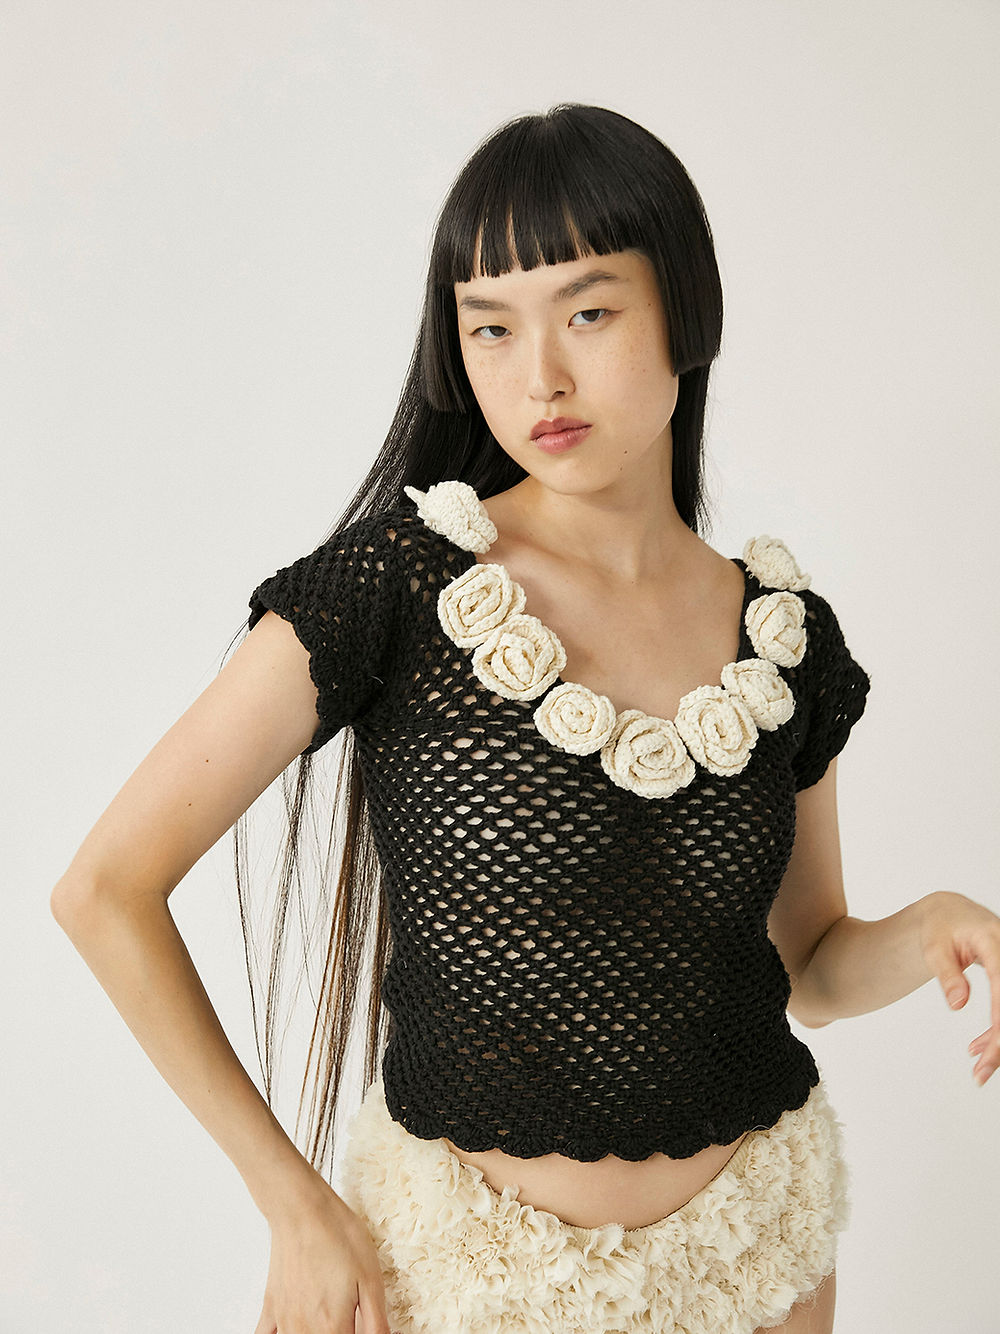 LEO BOUTIQUE Makalu Crochet Top Black w/ Ivory Flowers TACH